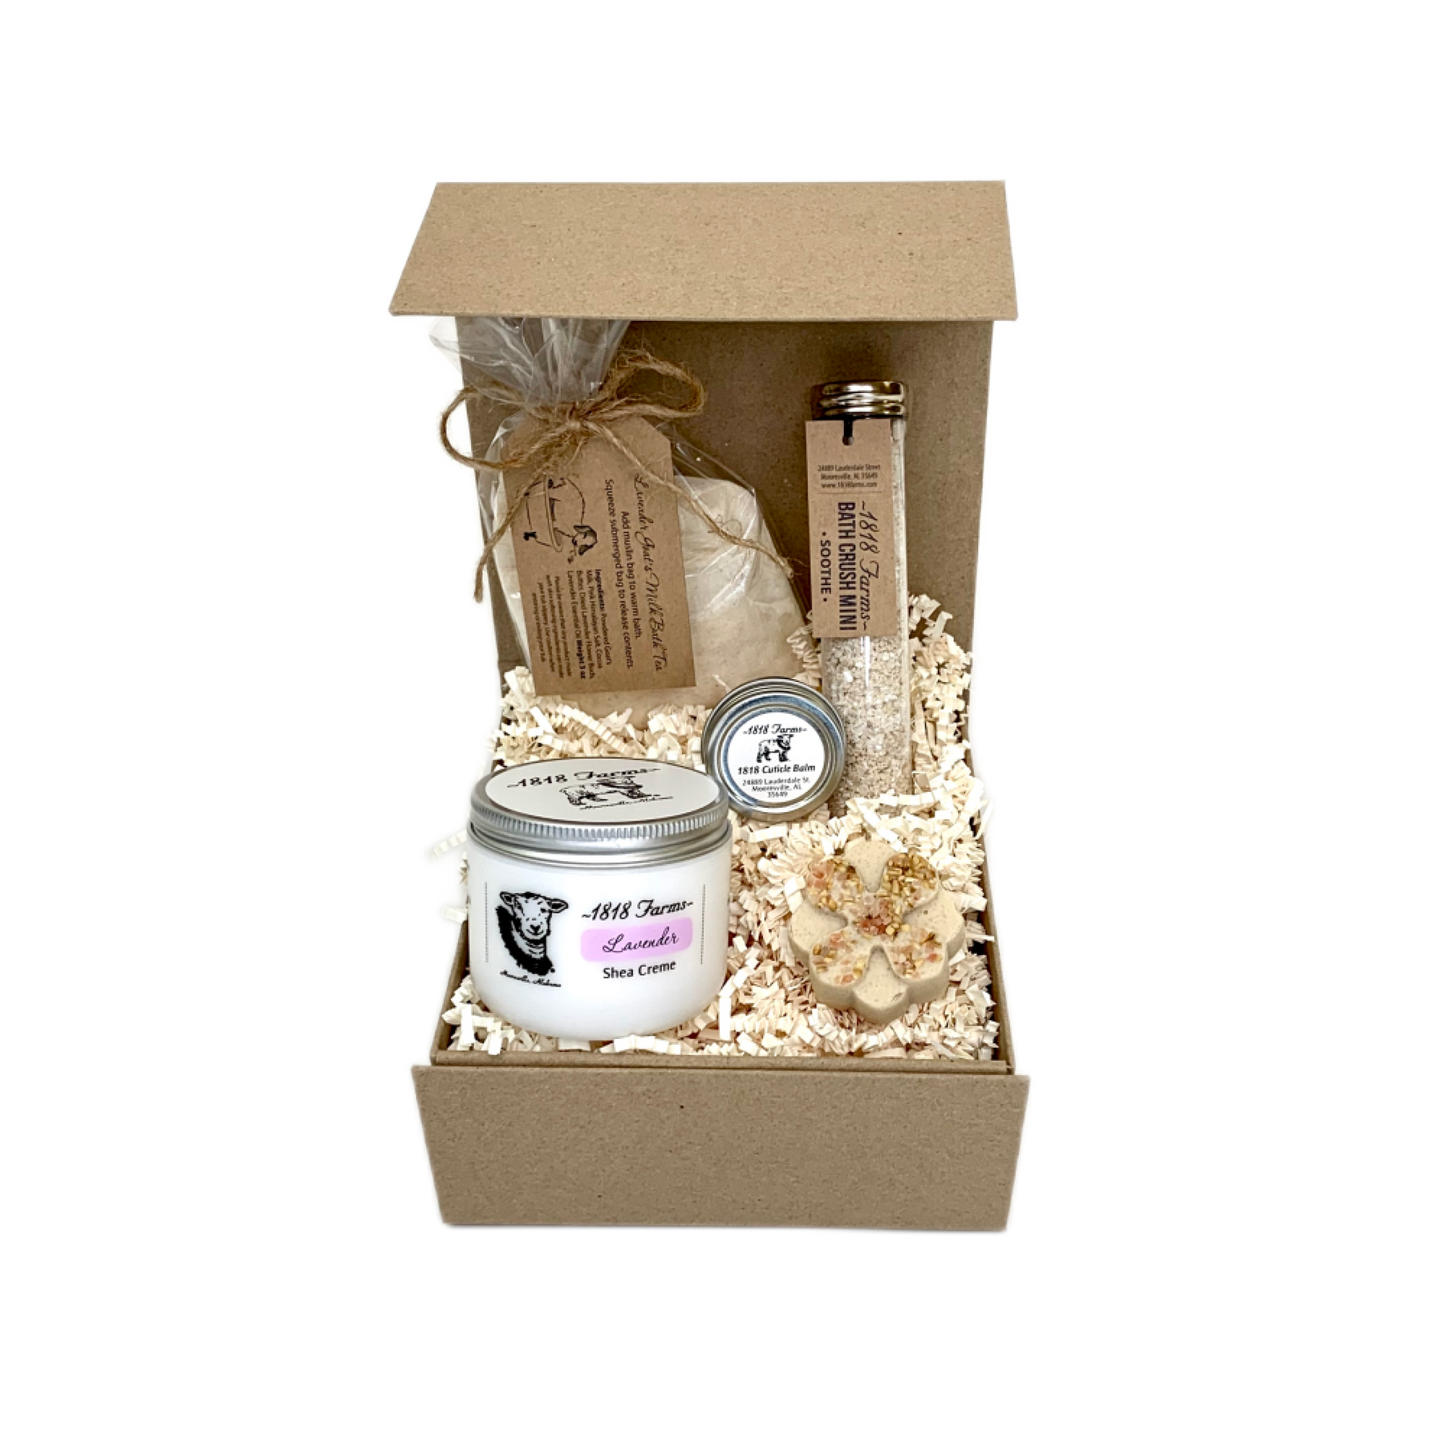 Bath Lover's Gift Box Gift Basket 1818 Farms   